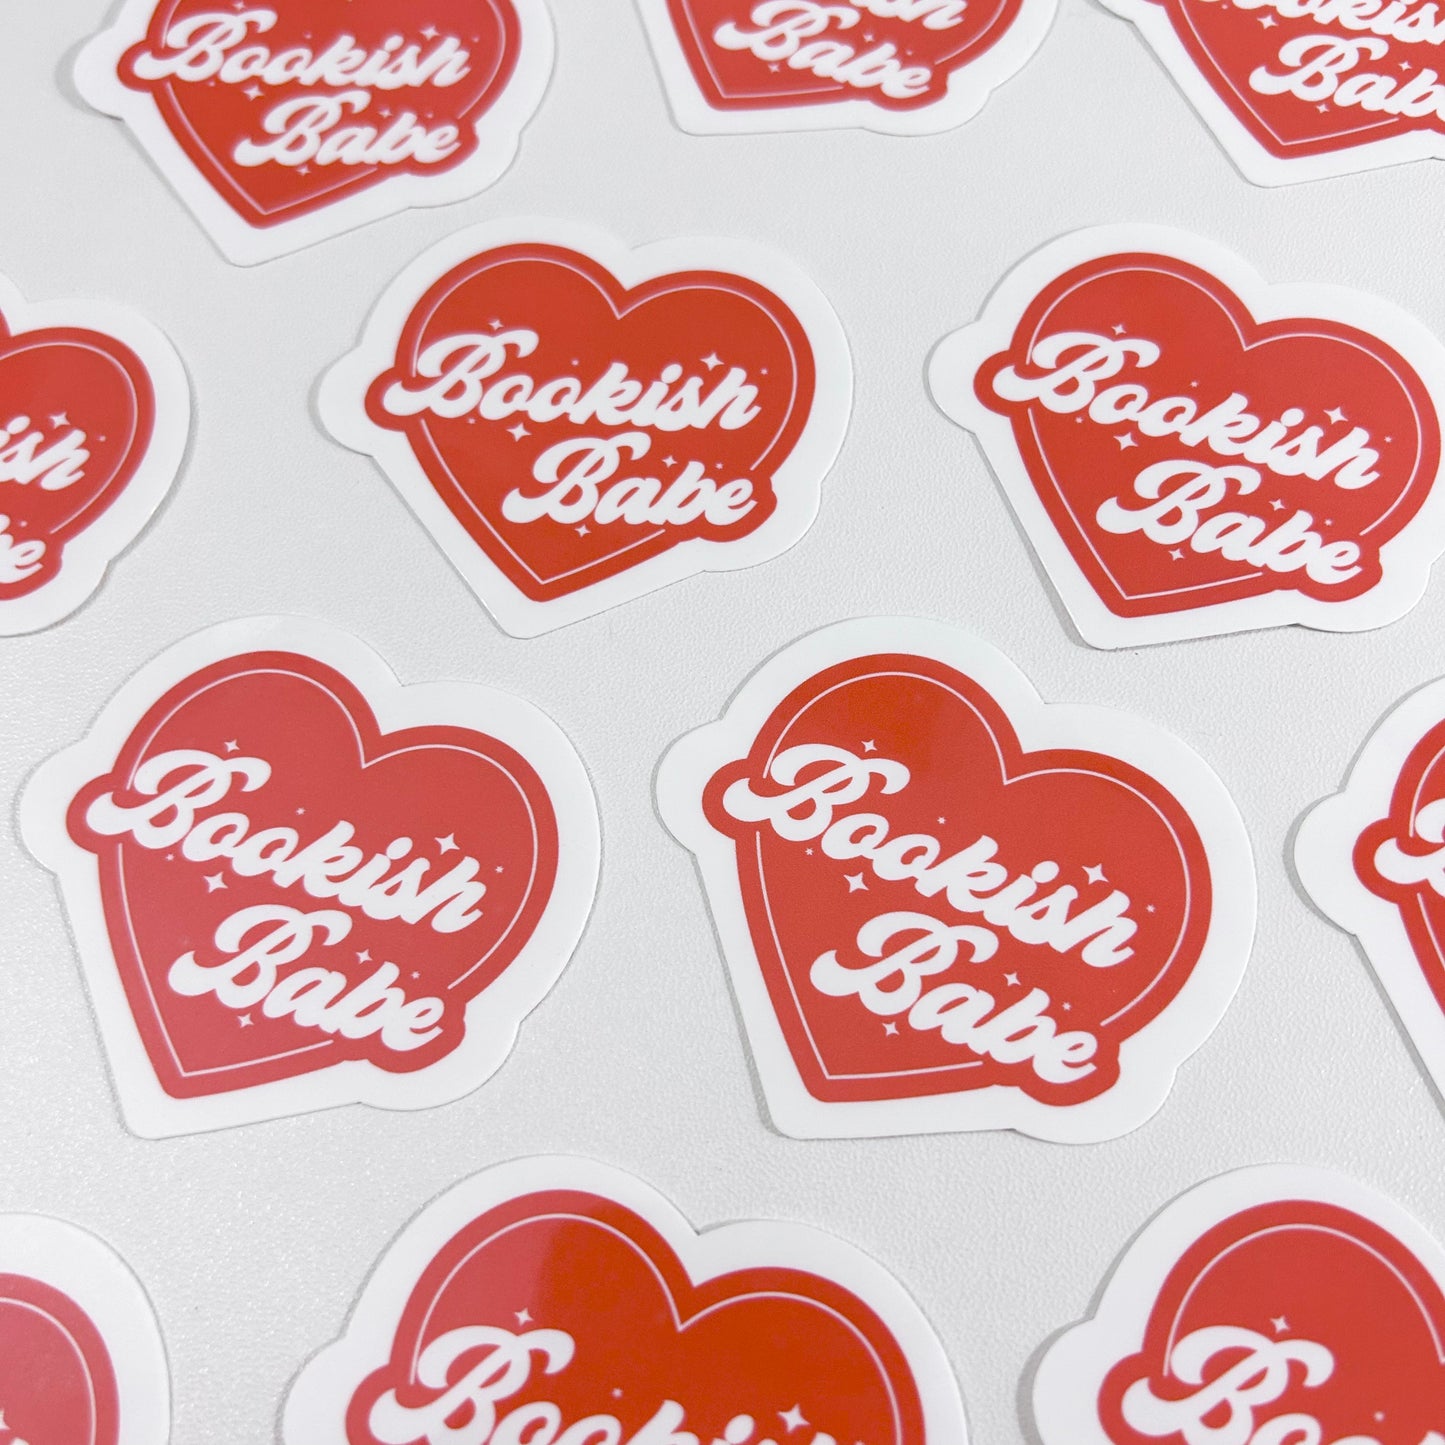 Bookish Babe - Heart Sticker